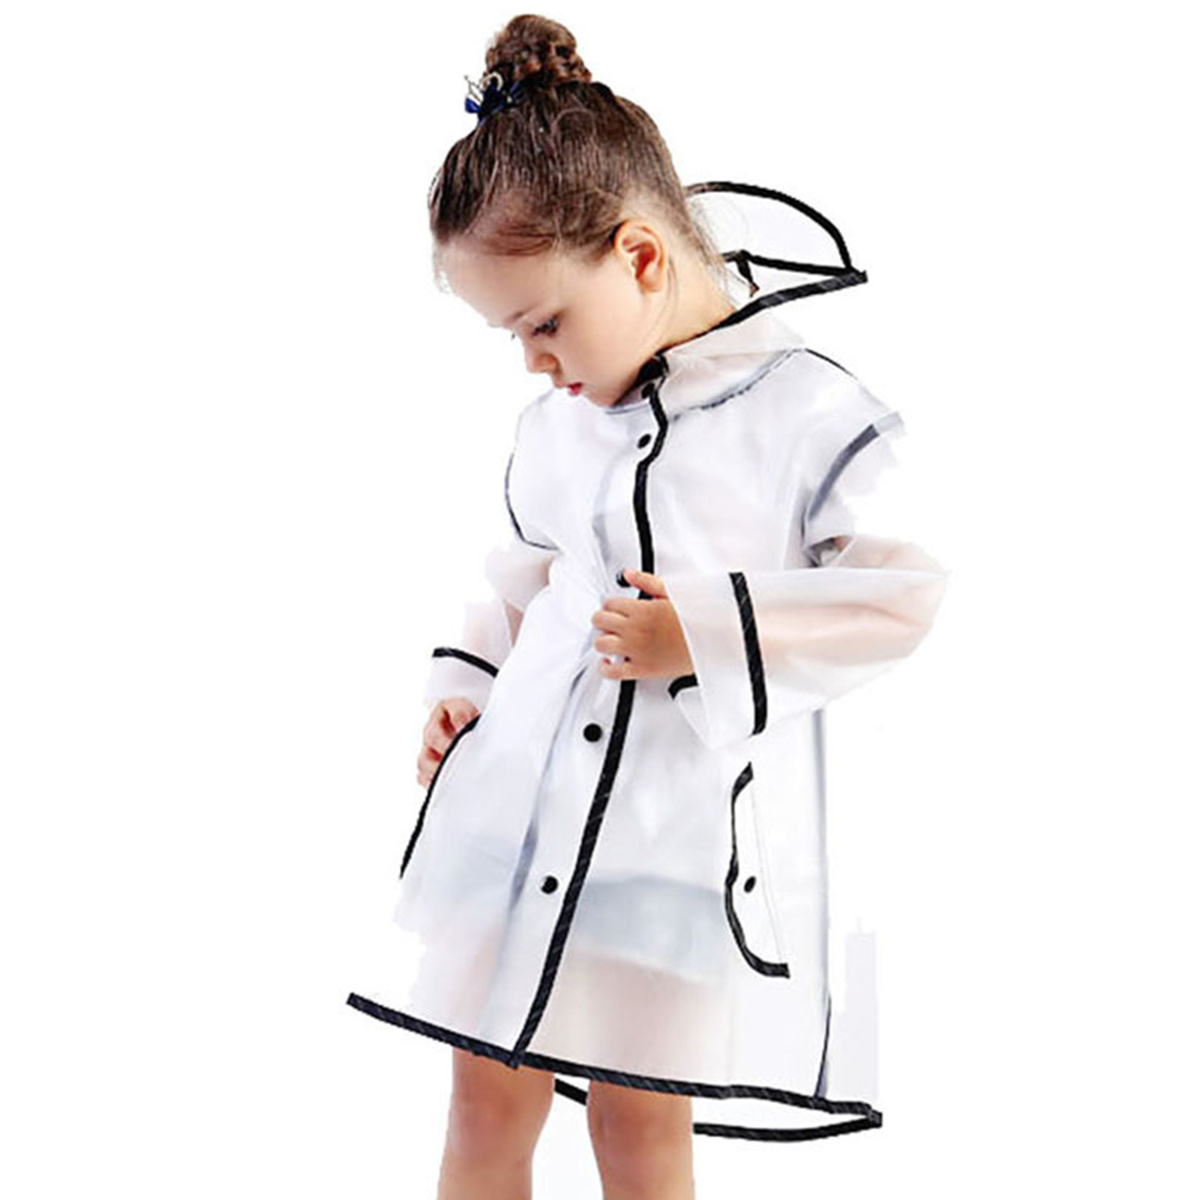 Musuos EVA Waterproof Rain Poncho Children Raincoat Jacket Protective Covers Hooded - image 1 of 3